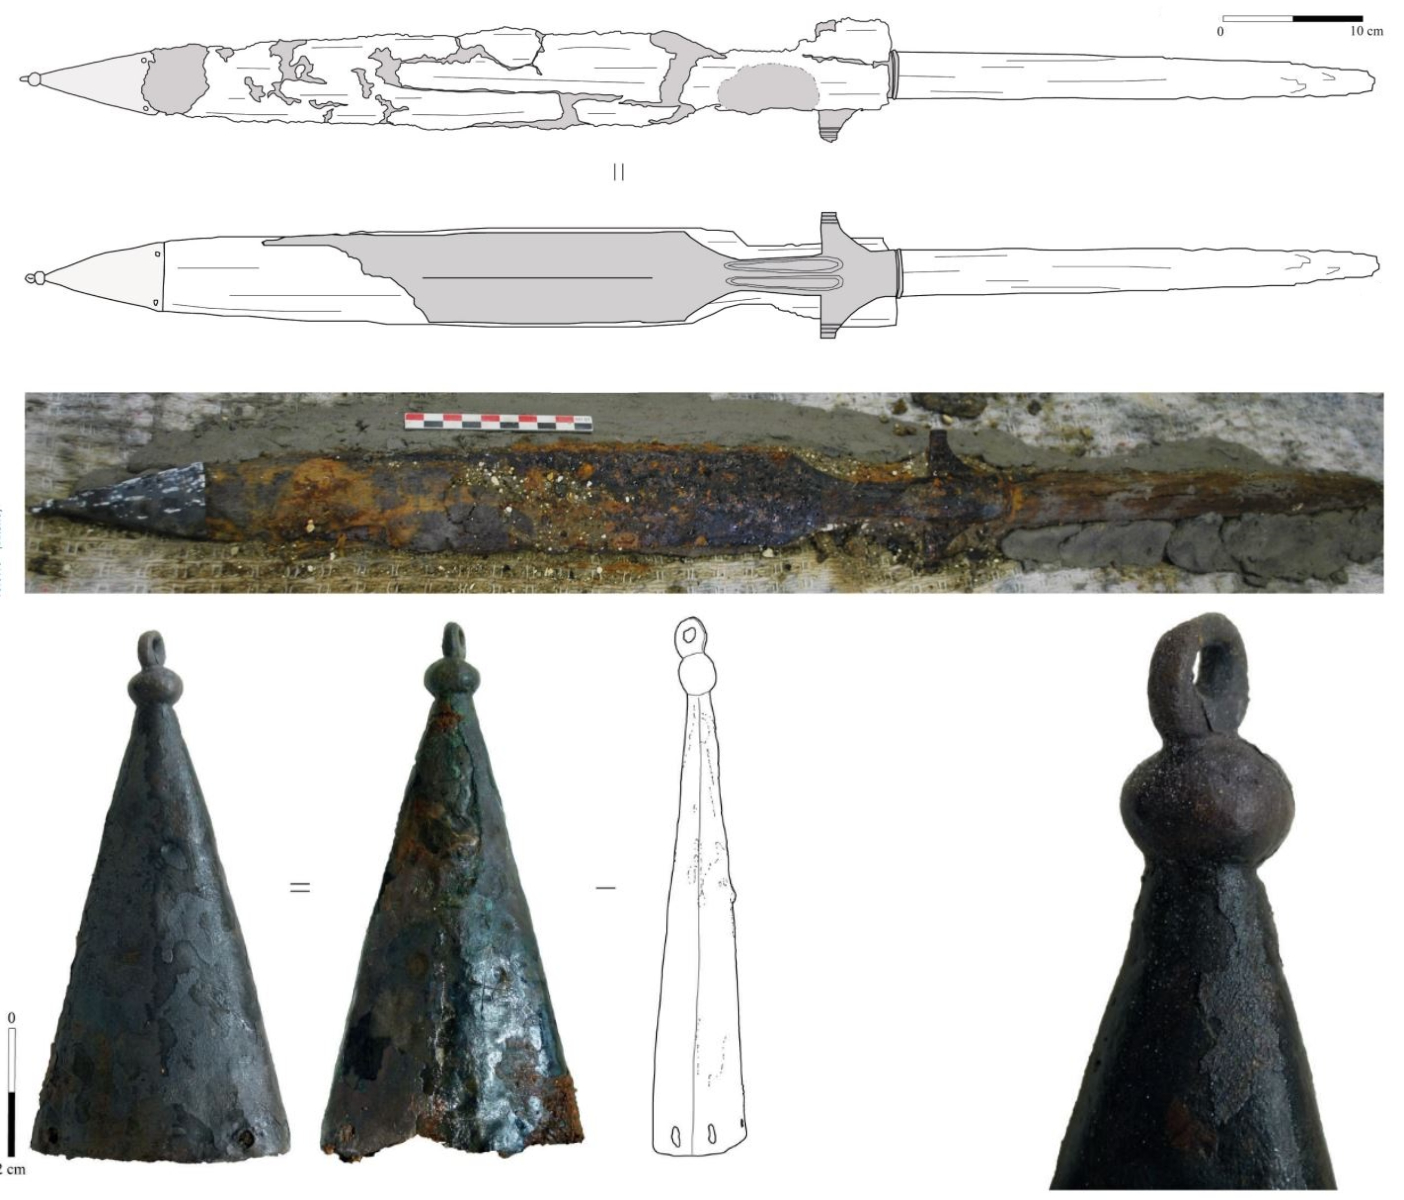 Medieval crossed spears, lances. Single logo in modern thin line